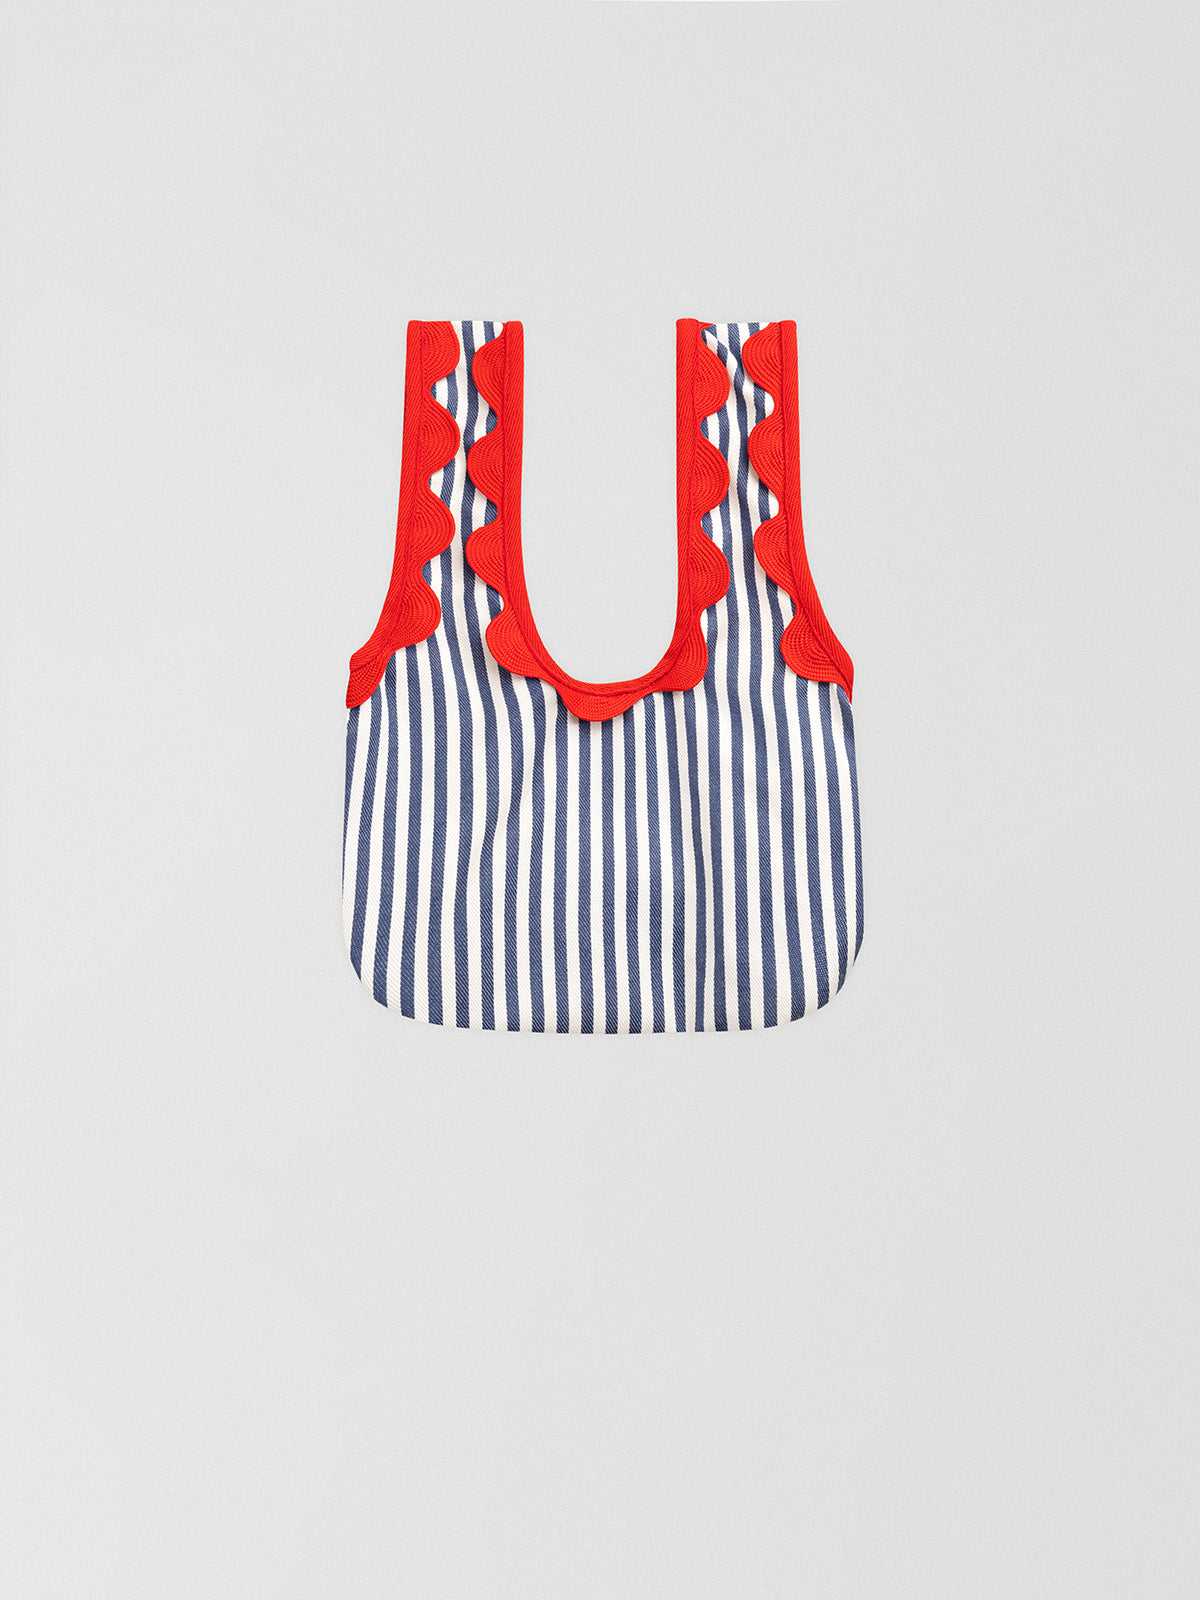 Anchor Blue Mini Handbag is a mini blue striped handbag with matching red ripple detail.